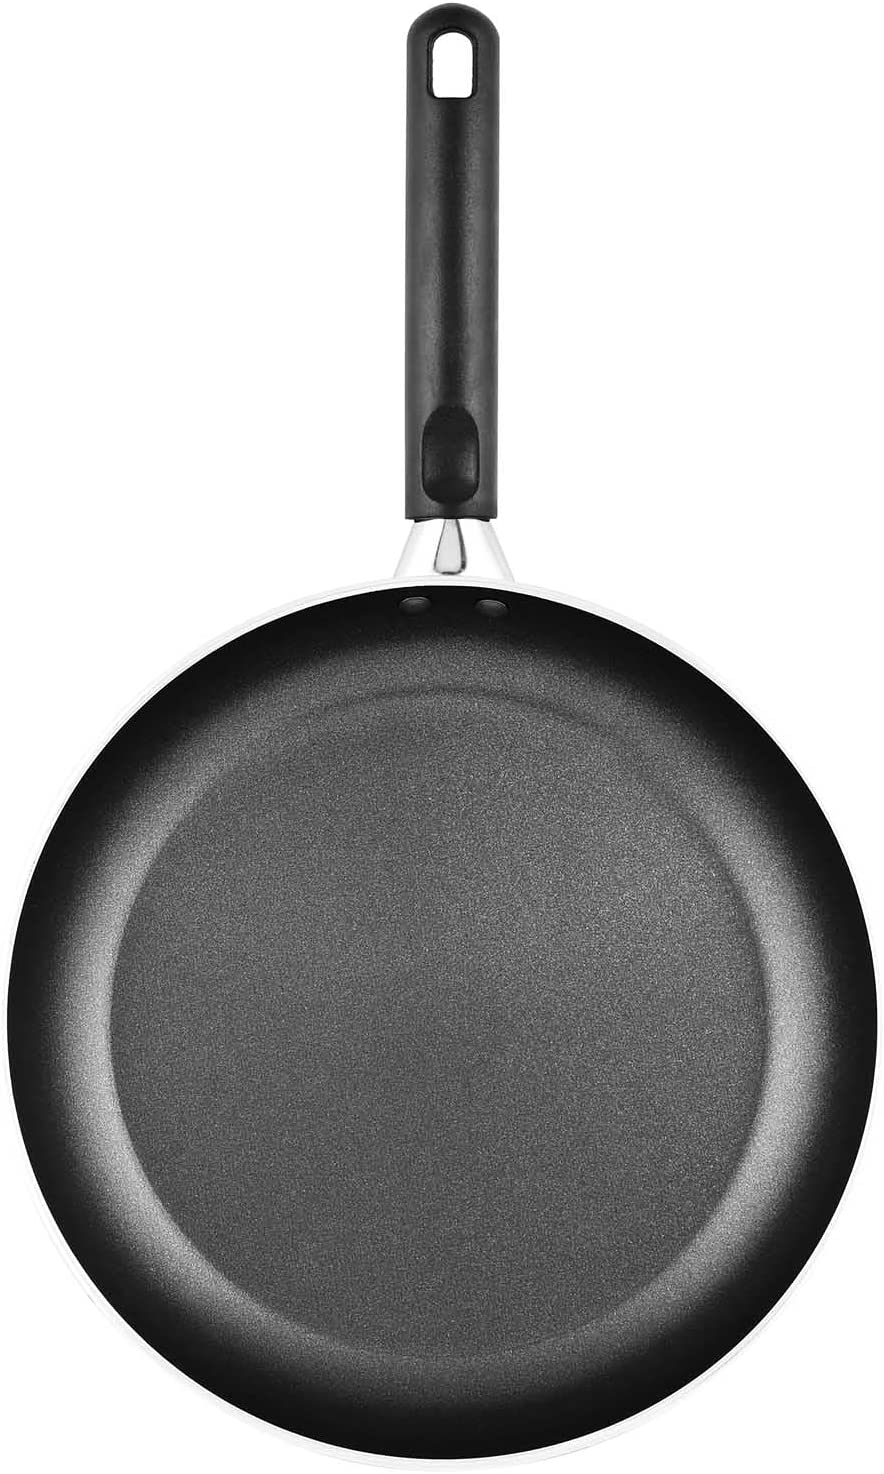 Prestige Fry Pan 30cm - 15905